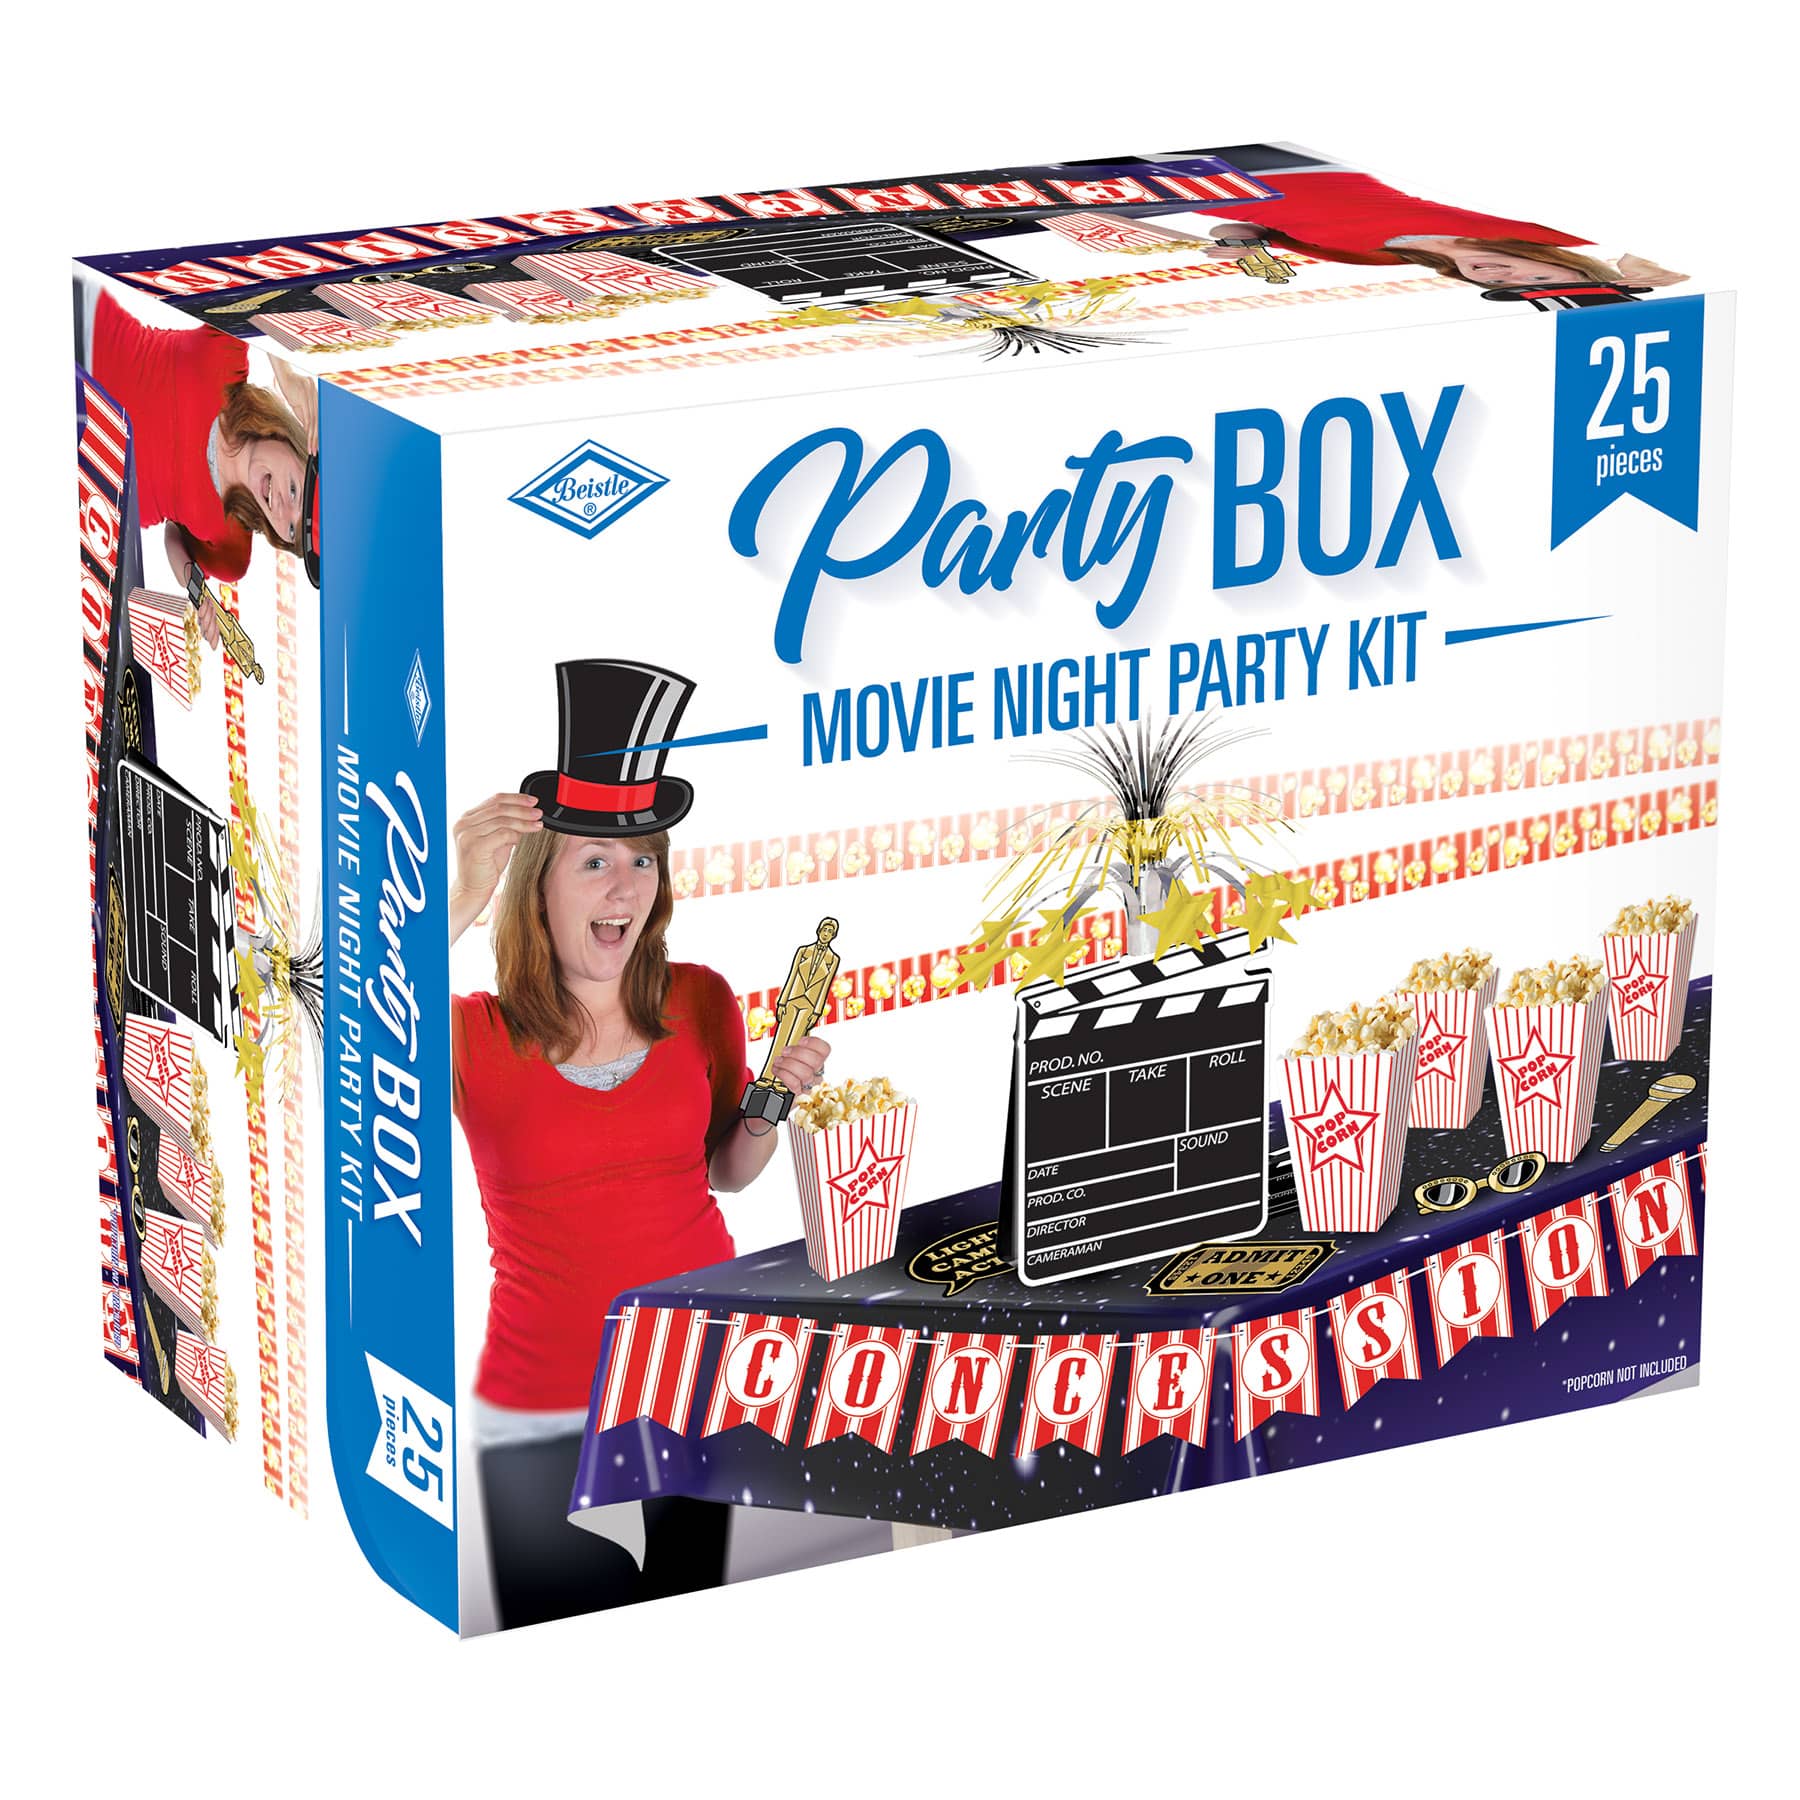 Movie Night Party Box (Pack of 1) Movie Night Party Box, movie night, party box, decoration, awards night, wholesale, inexpensive, bulk